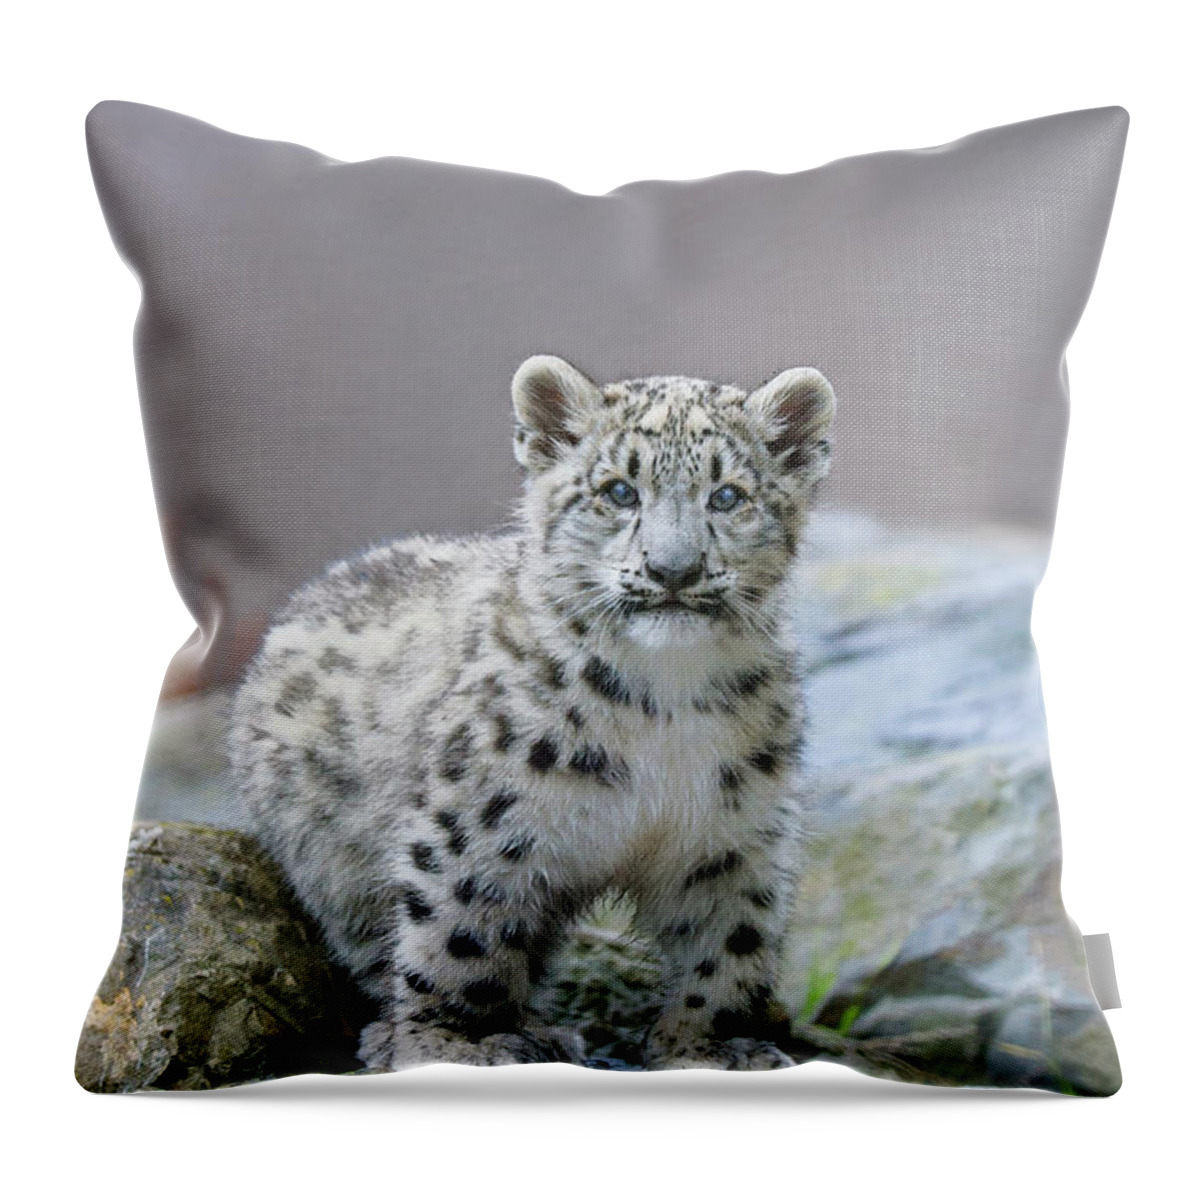 Suzi Eszterhas Throw Pillow featuring the photograph Snow Leopard Cub by Suzi Eszterhas